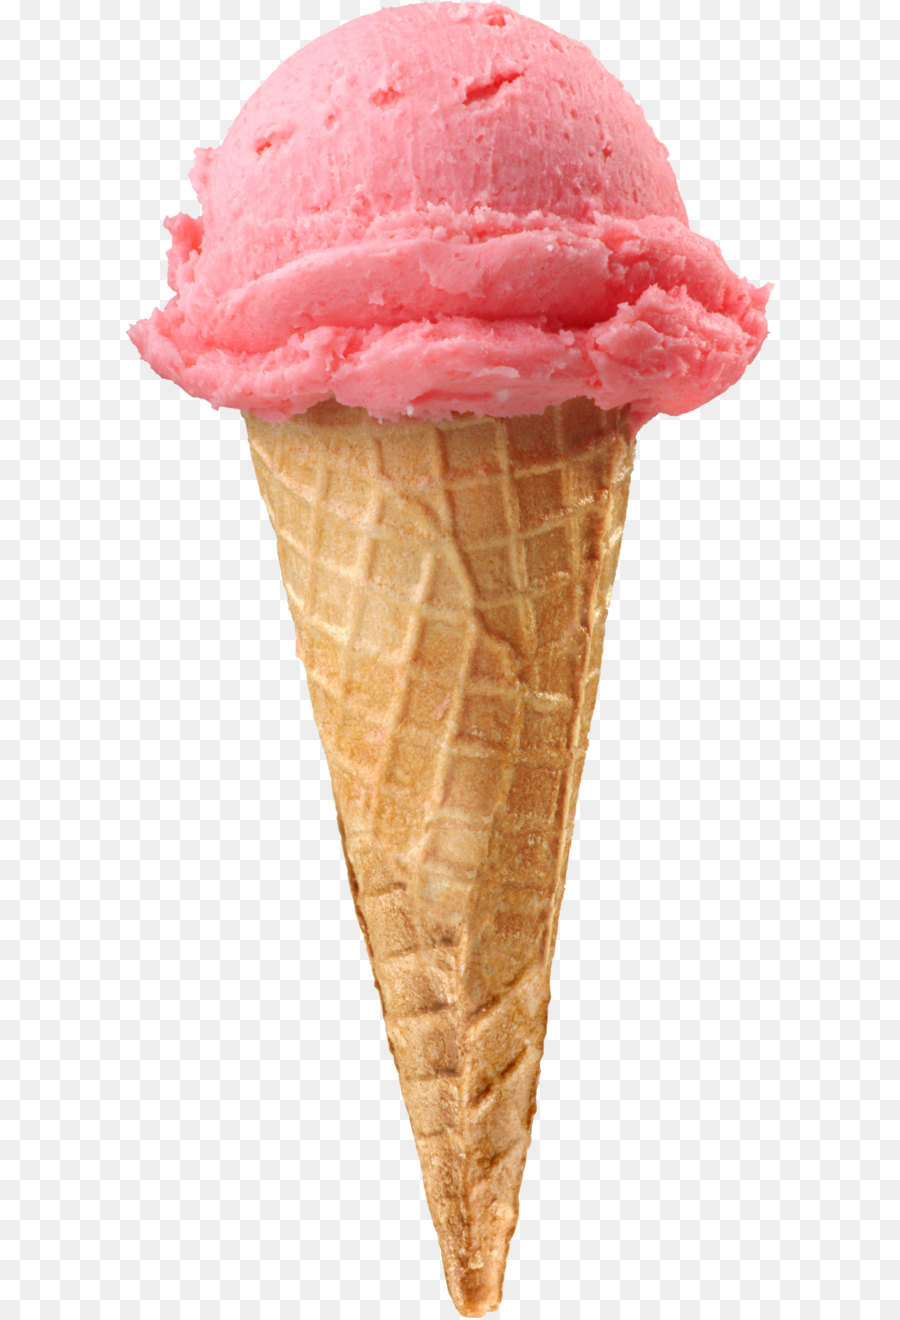 Ice cream cake Sundae Ice cream cone - Ice cream PNG image png download - 1738*3525 - Free Transparent Ice Cream png Download.